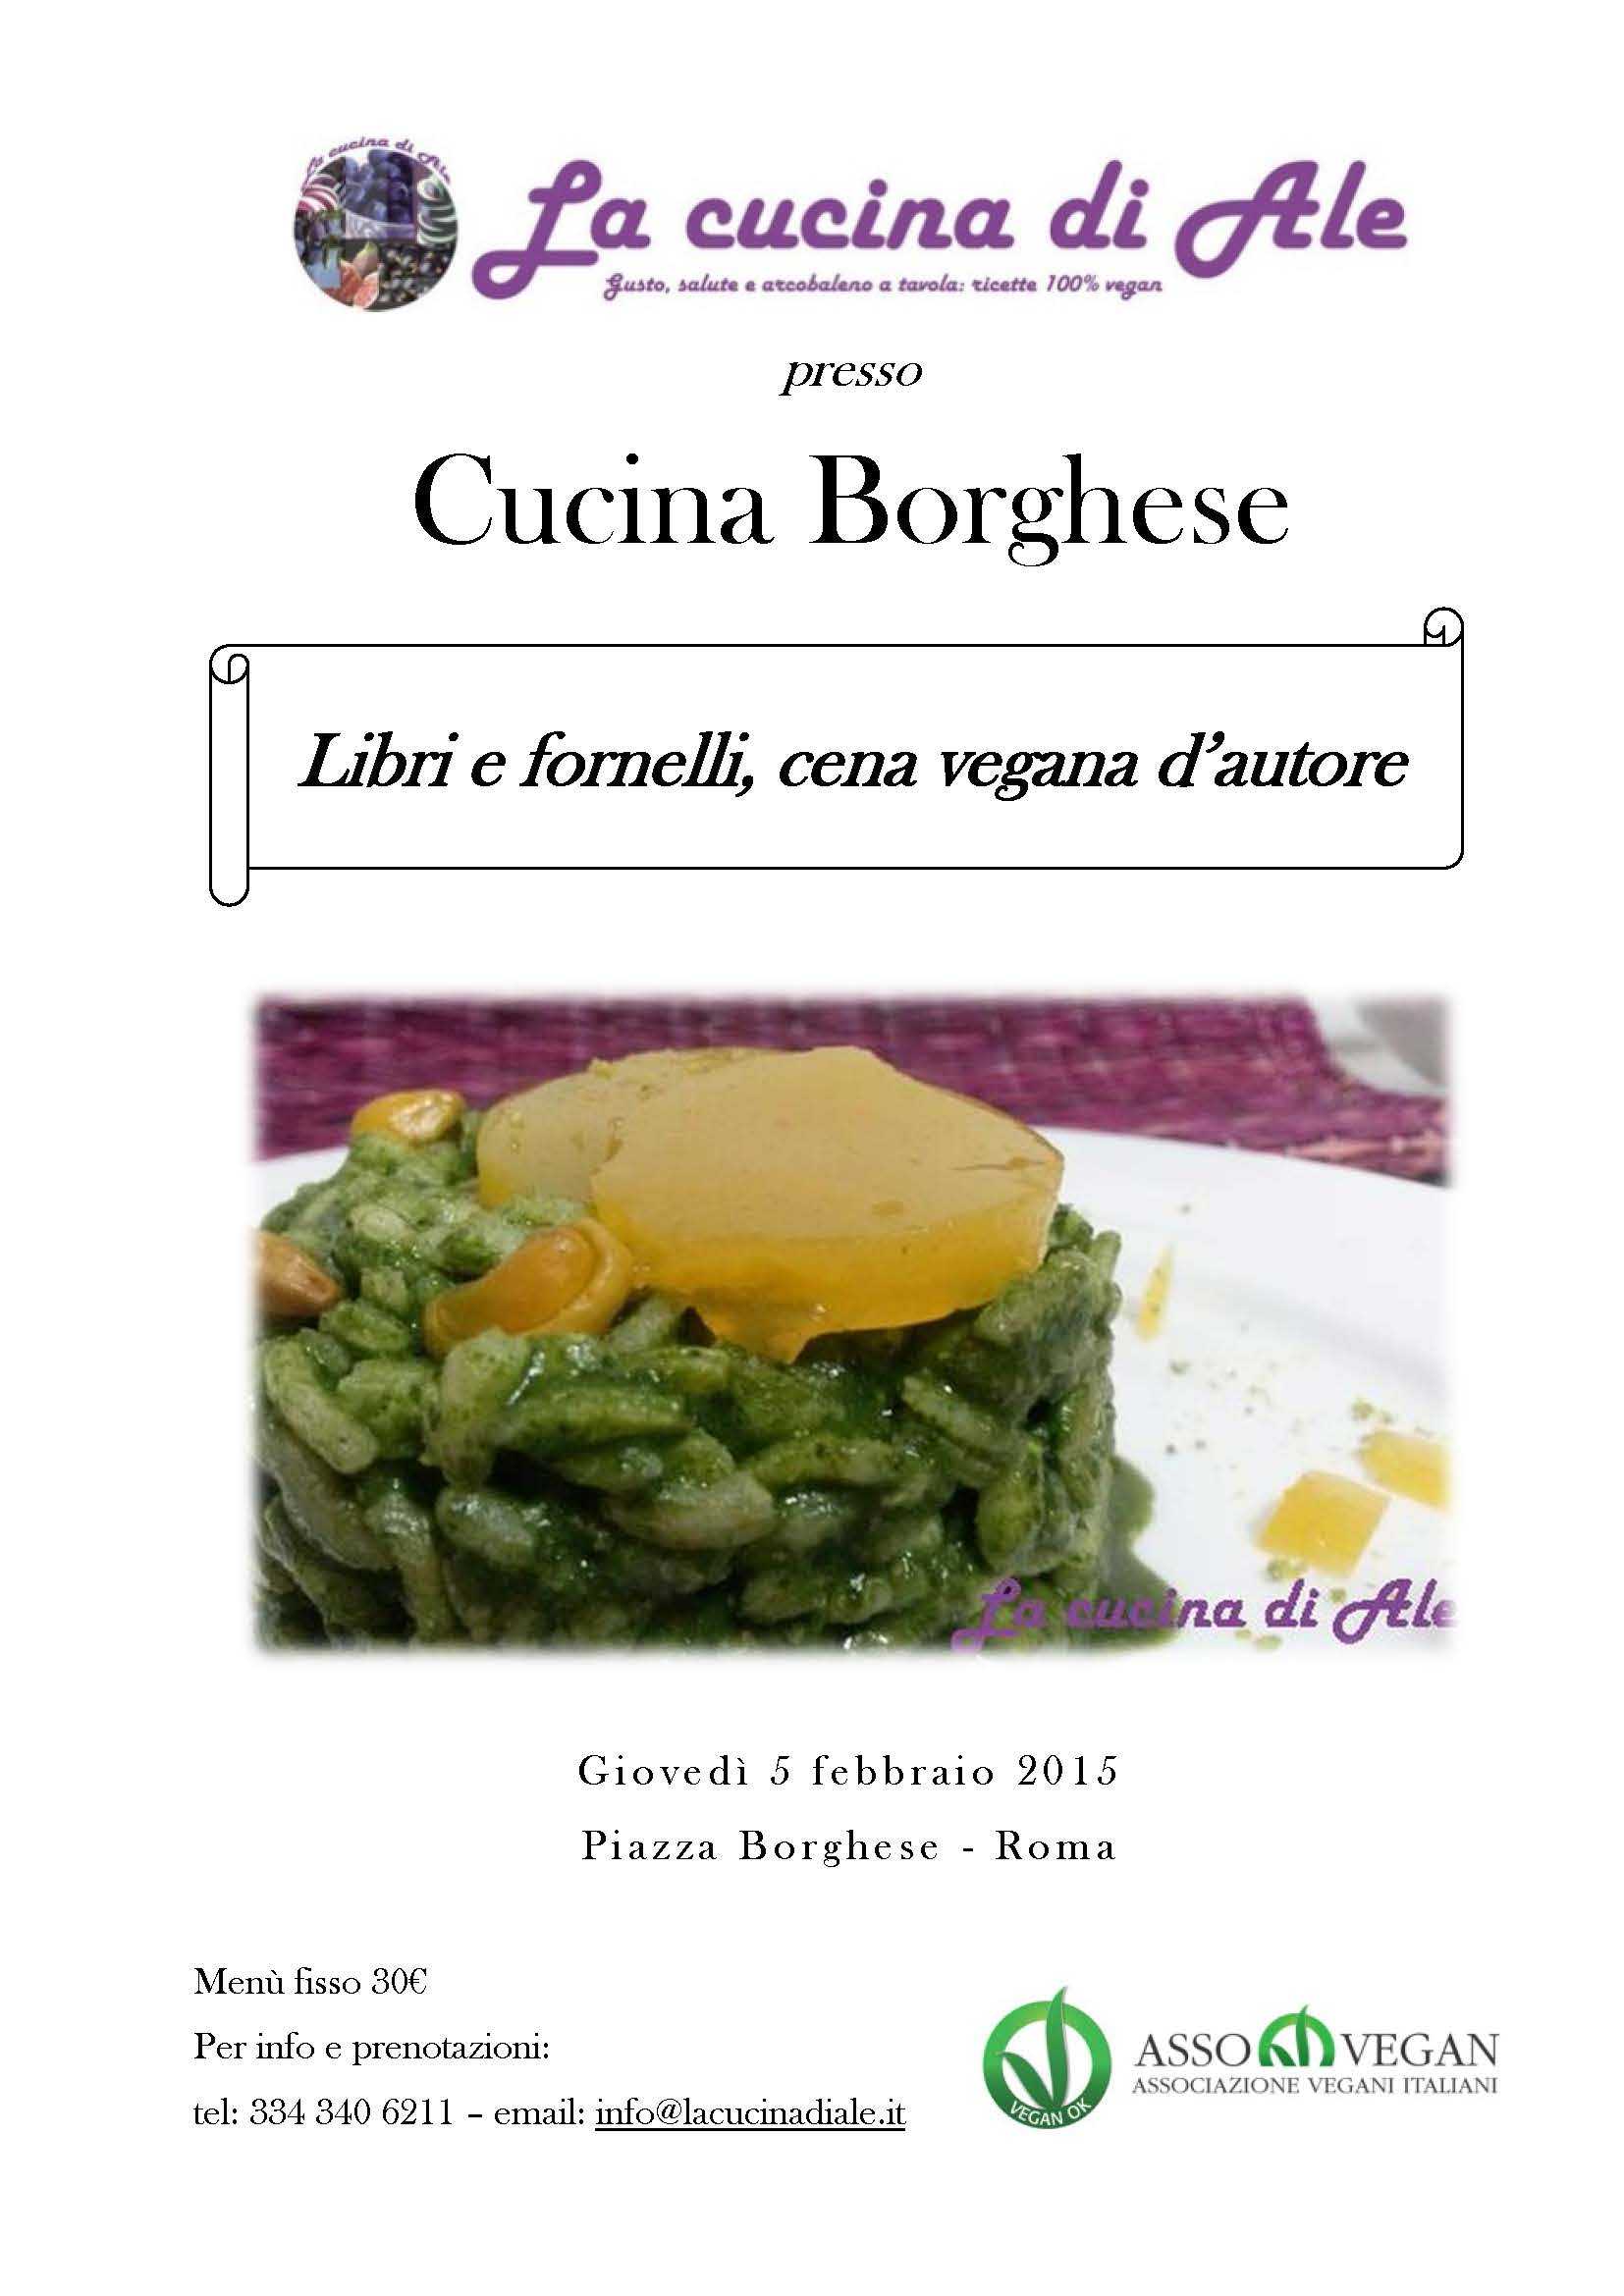 Cena veg, a Cucina Borghese torna libri e fornelli